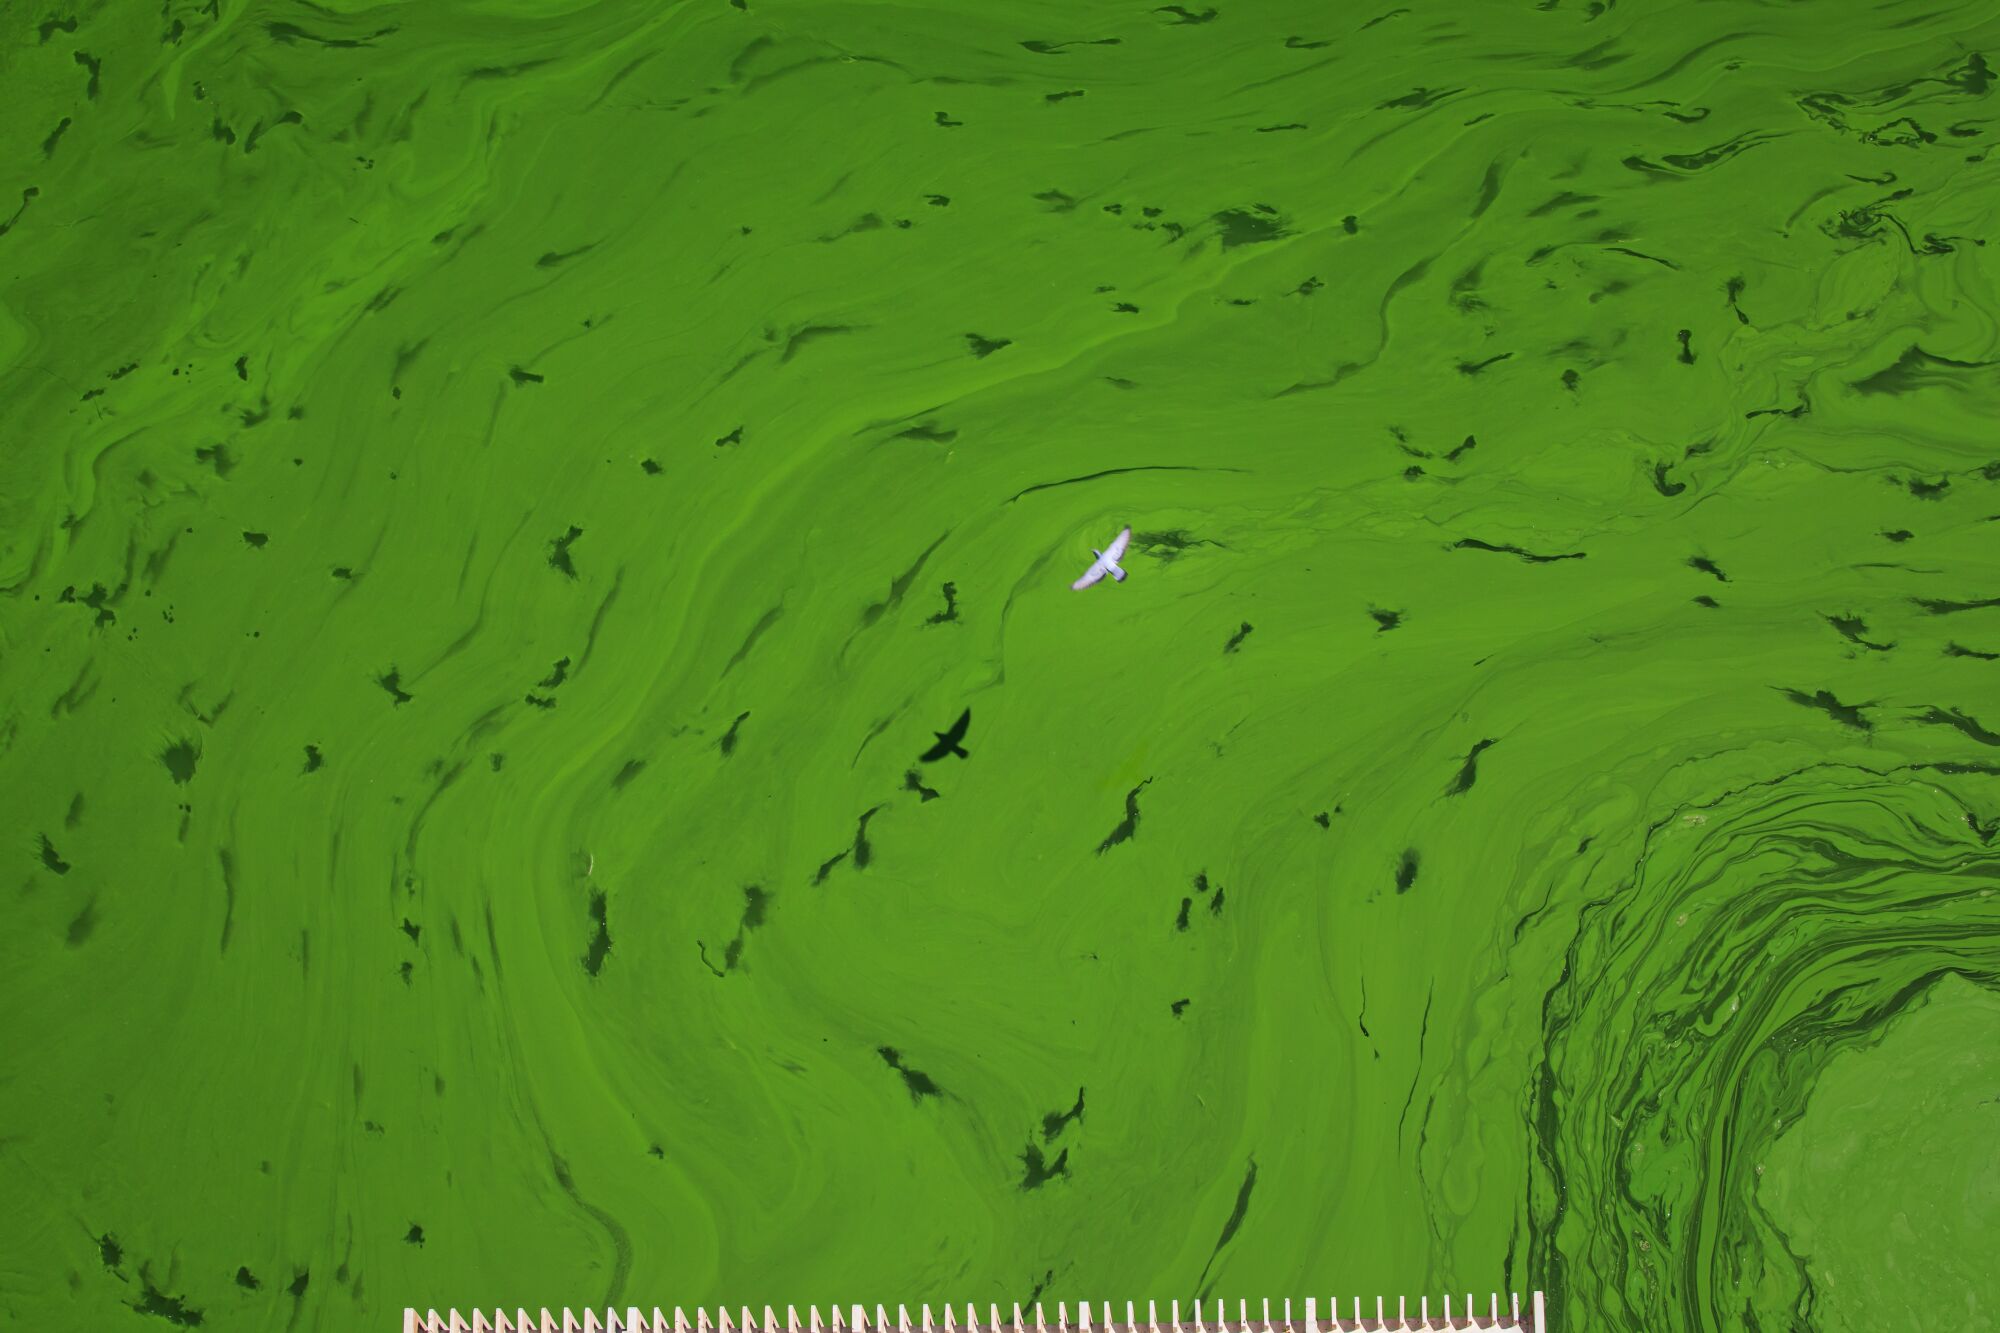 A river is full of green algae